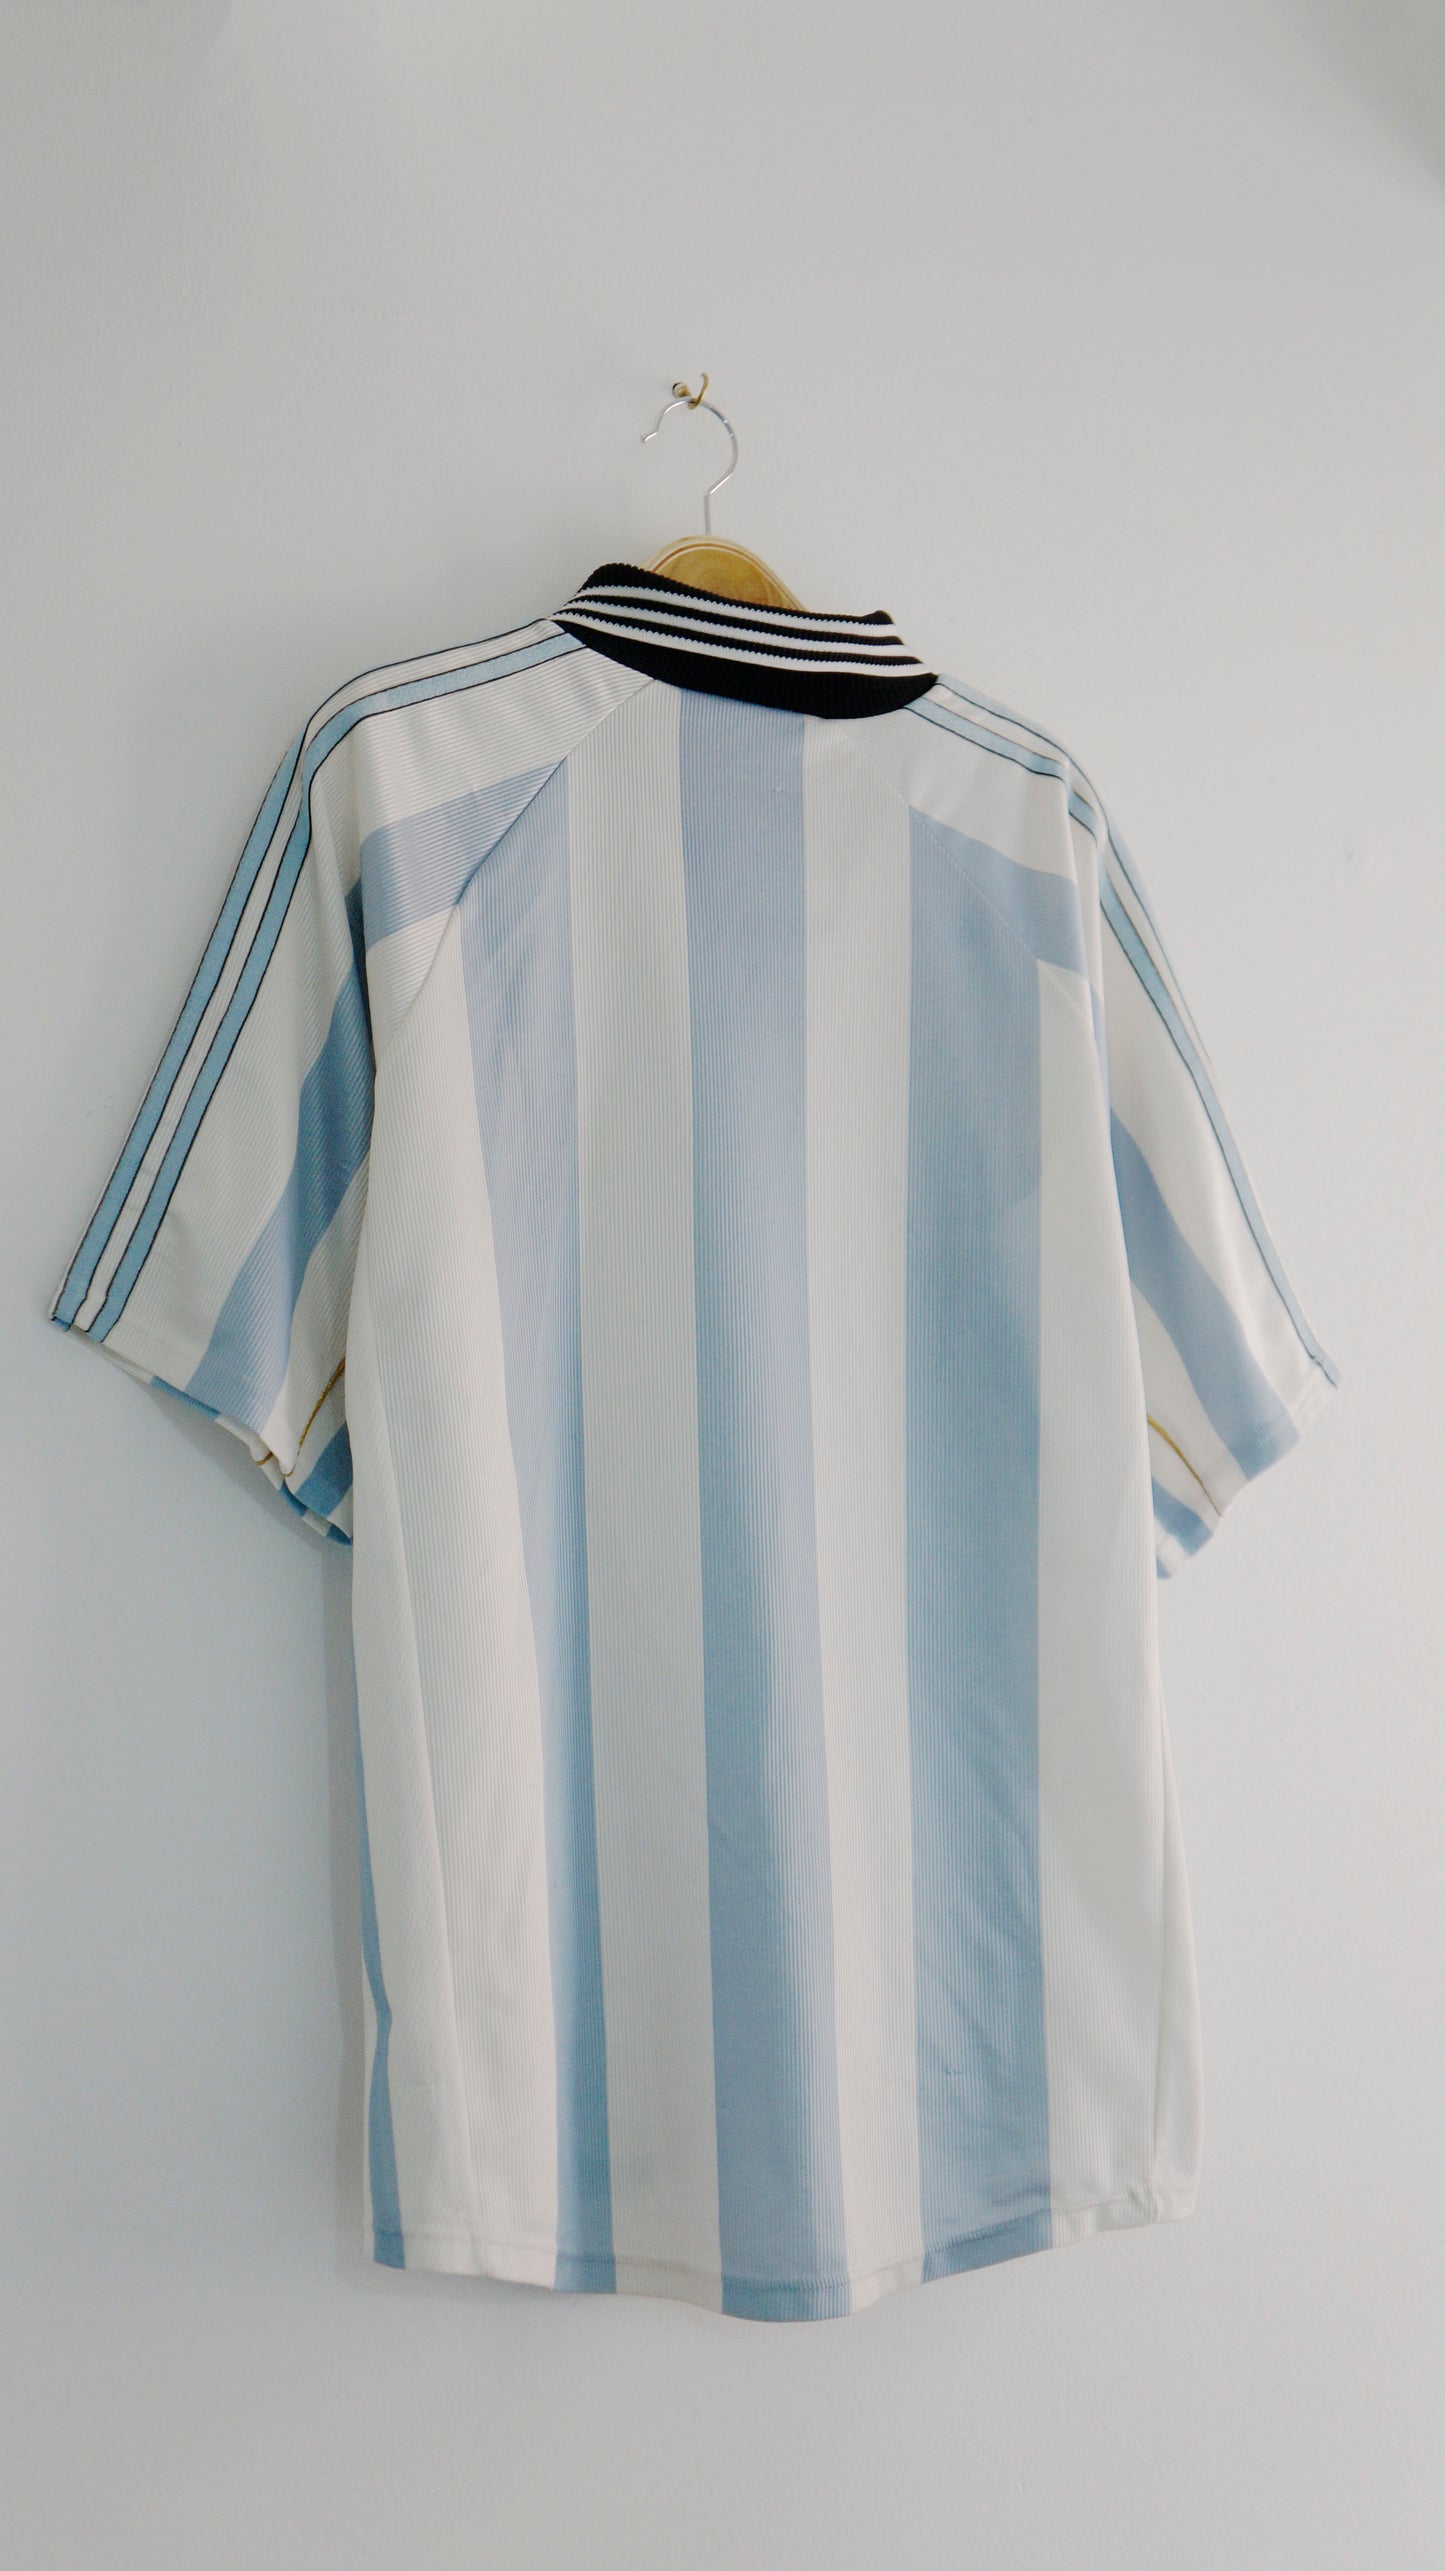 Argentina 1998 ORIGINAL T-shirt